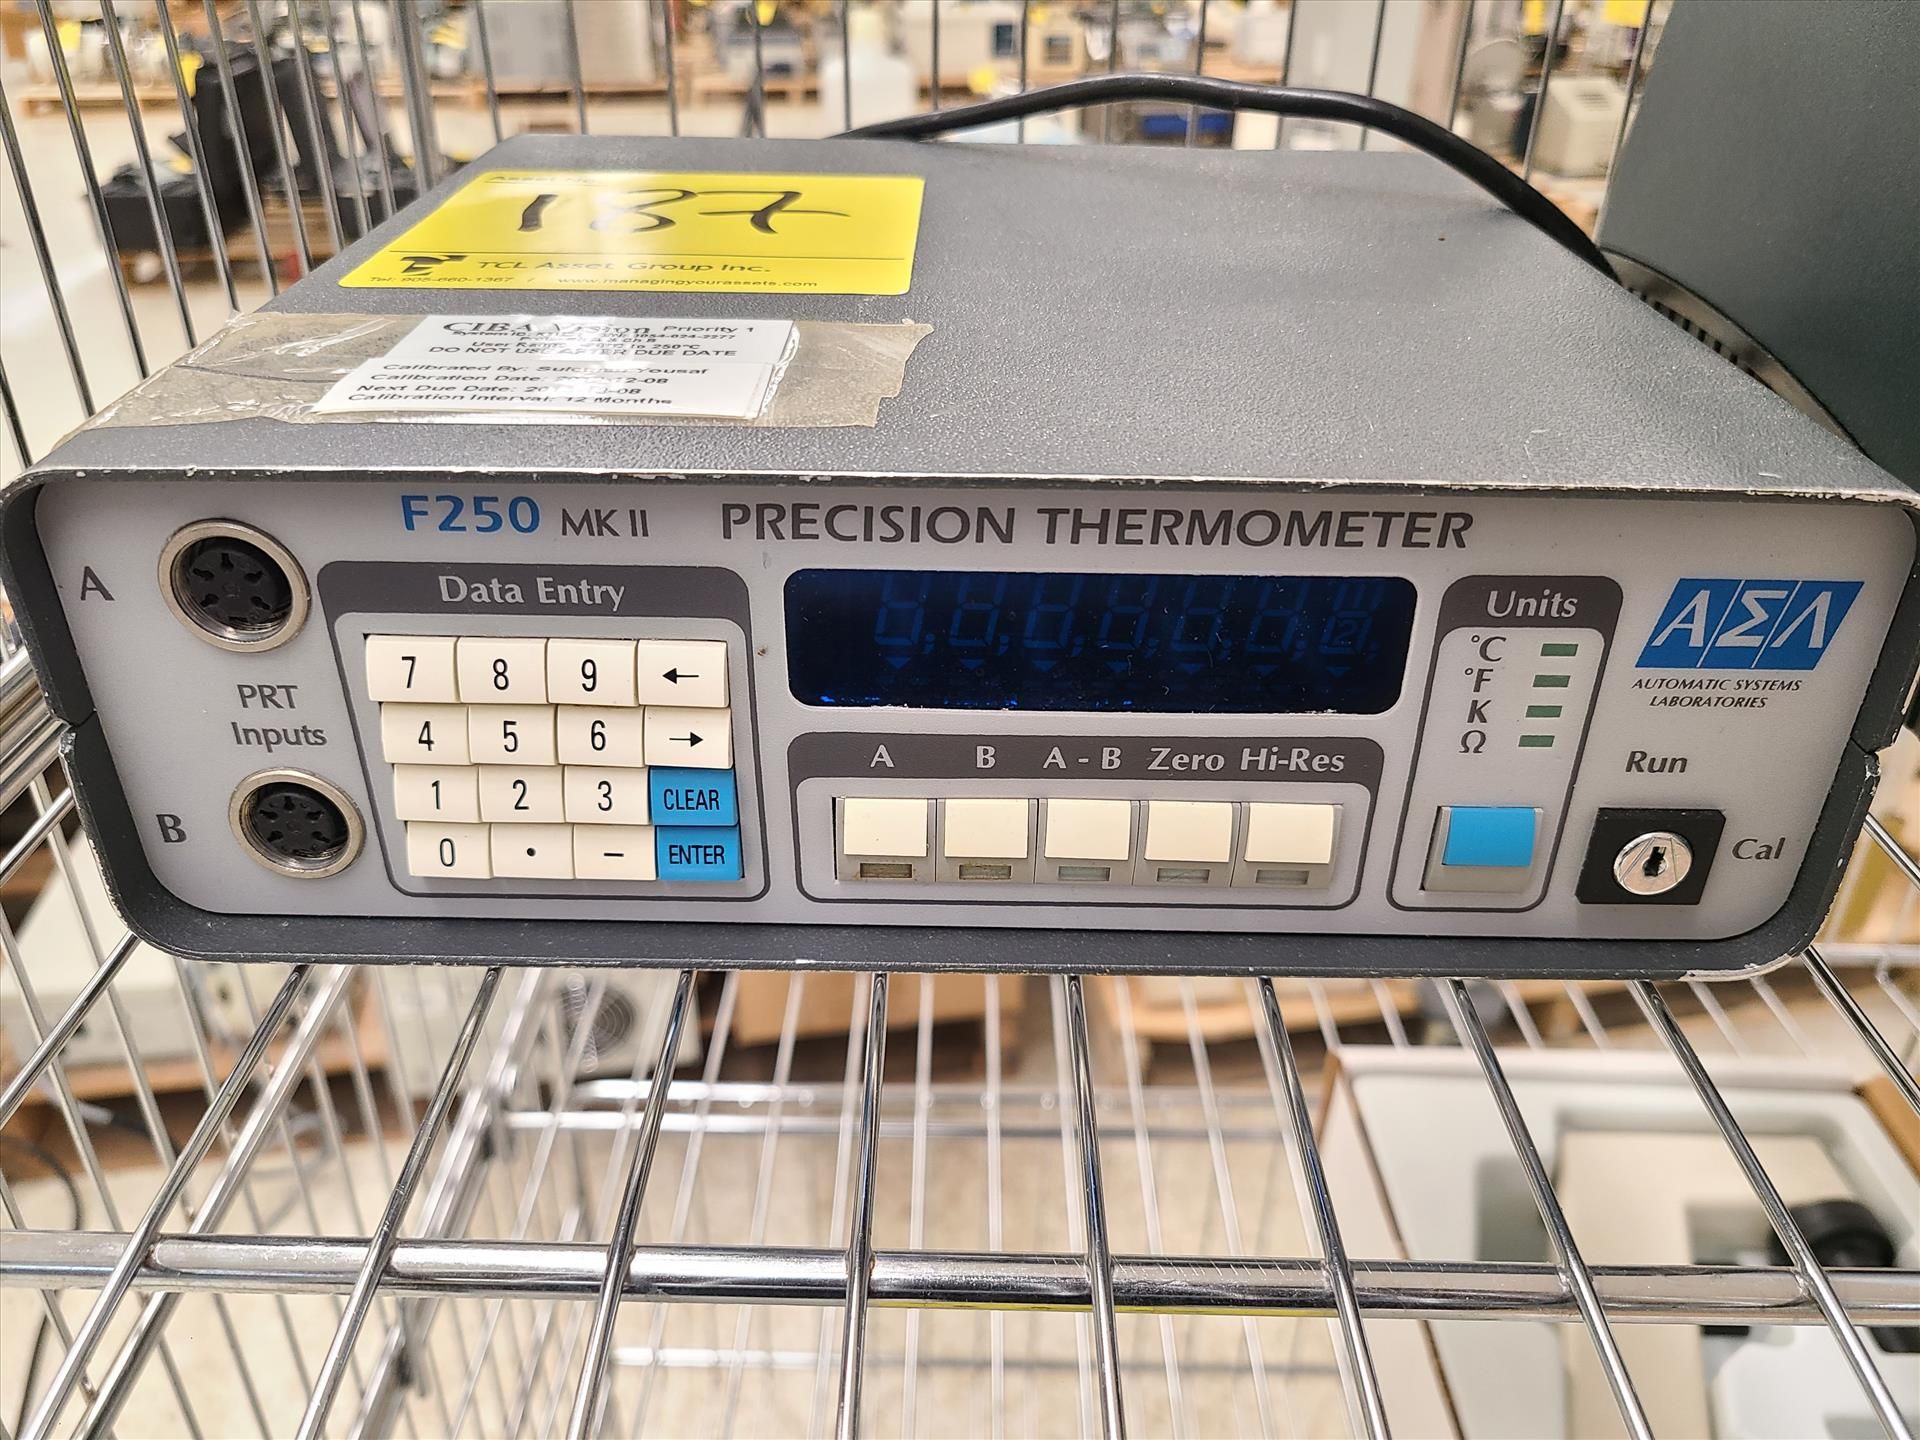 Automatic Systems Laboratories Precision Thermometer, mod. F250 MK II, ser. no. 9054 024 2277 - Image 2 of 3